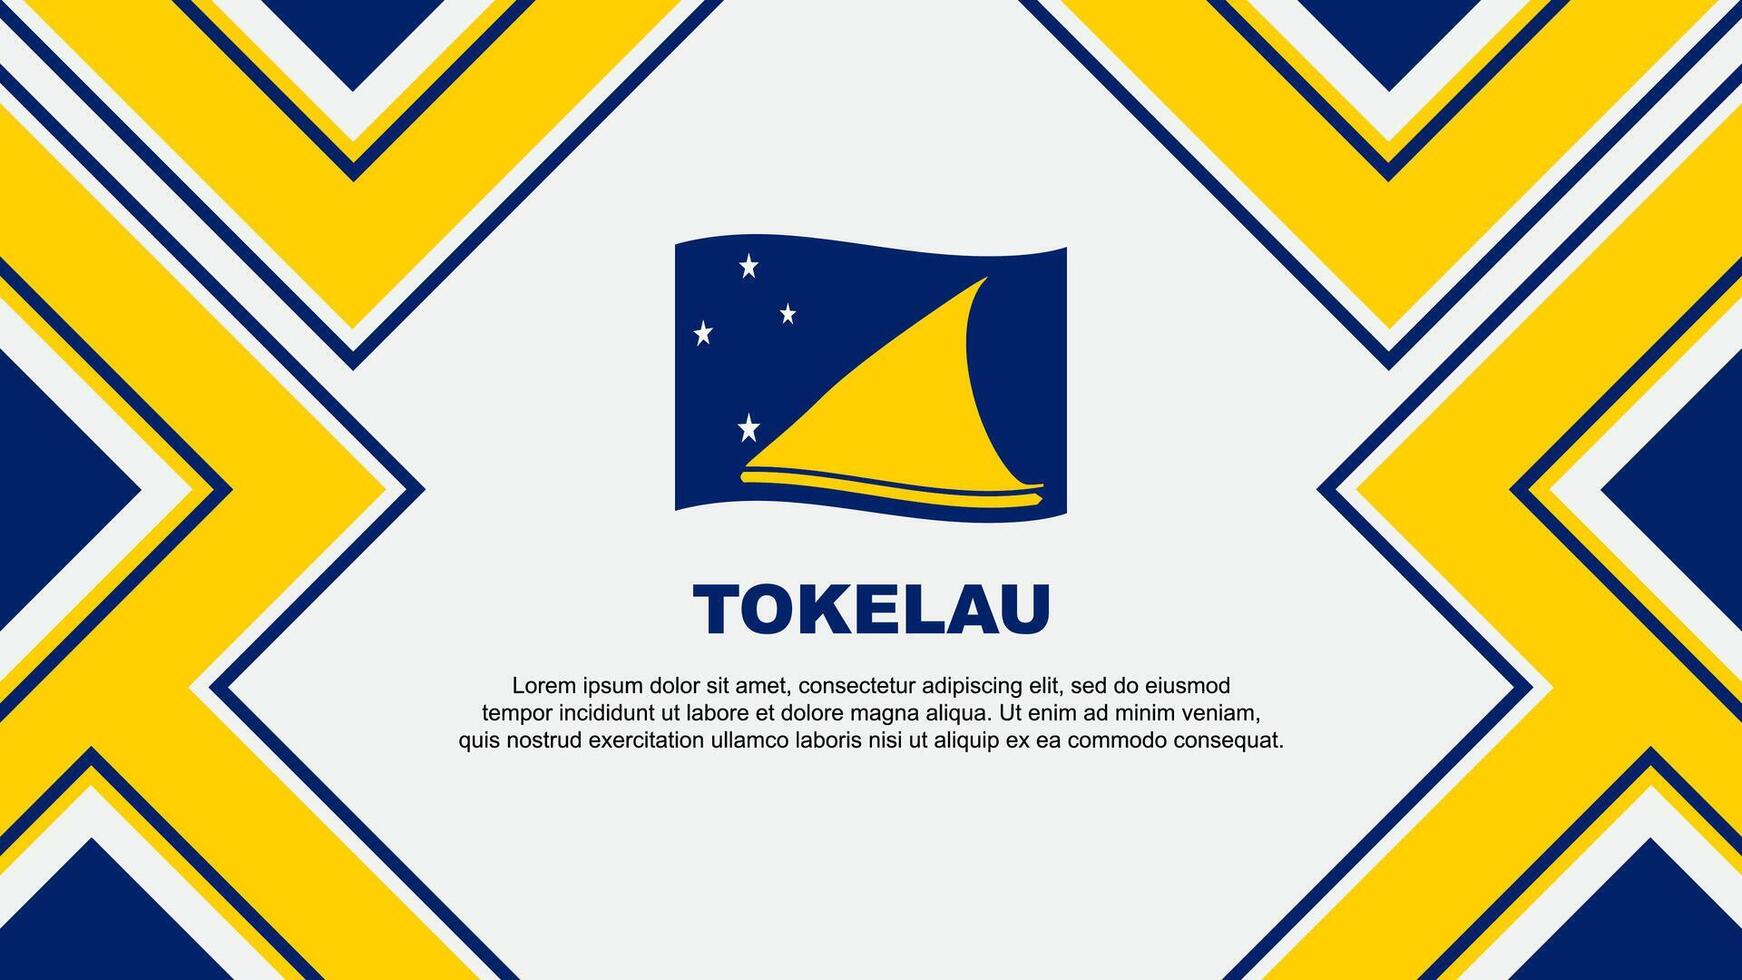 Tokelau Flag Abstract Background Design Template. Tokelau Independence Day Banner Wallpaper Vector Illustration. Tokelau Vector